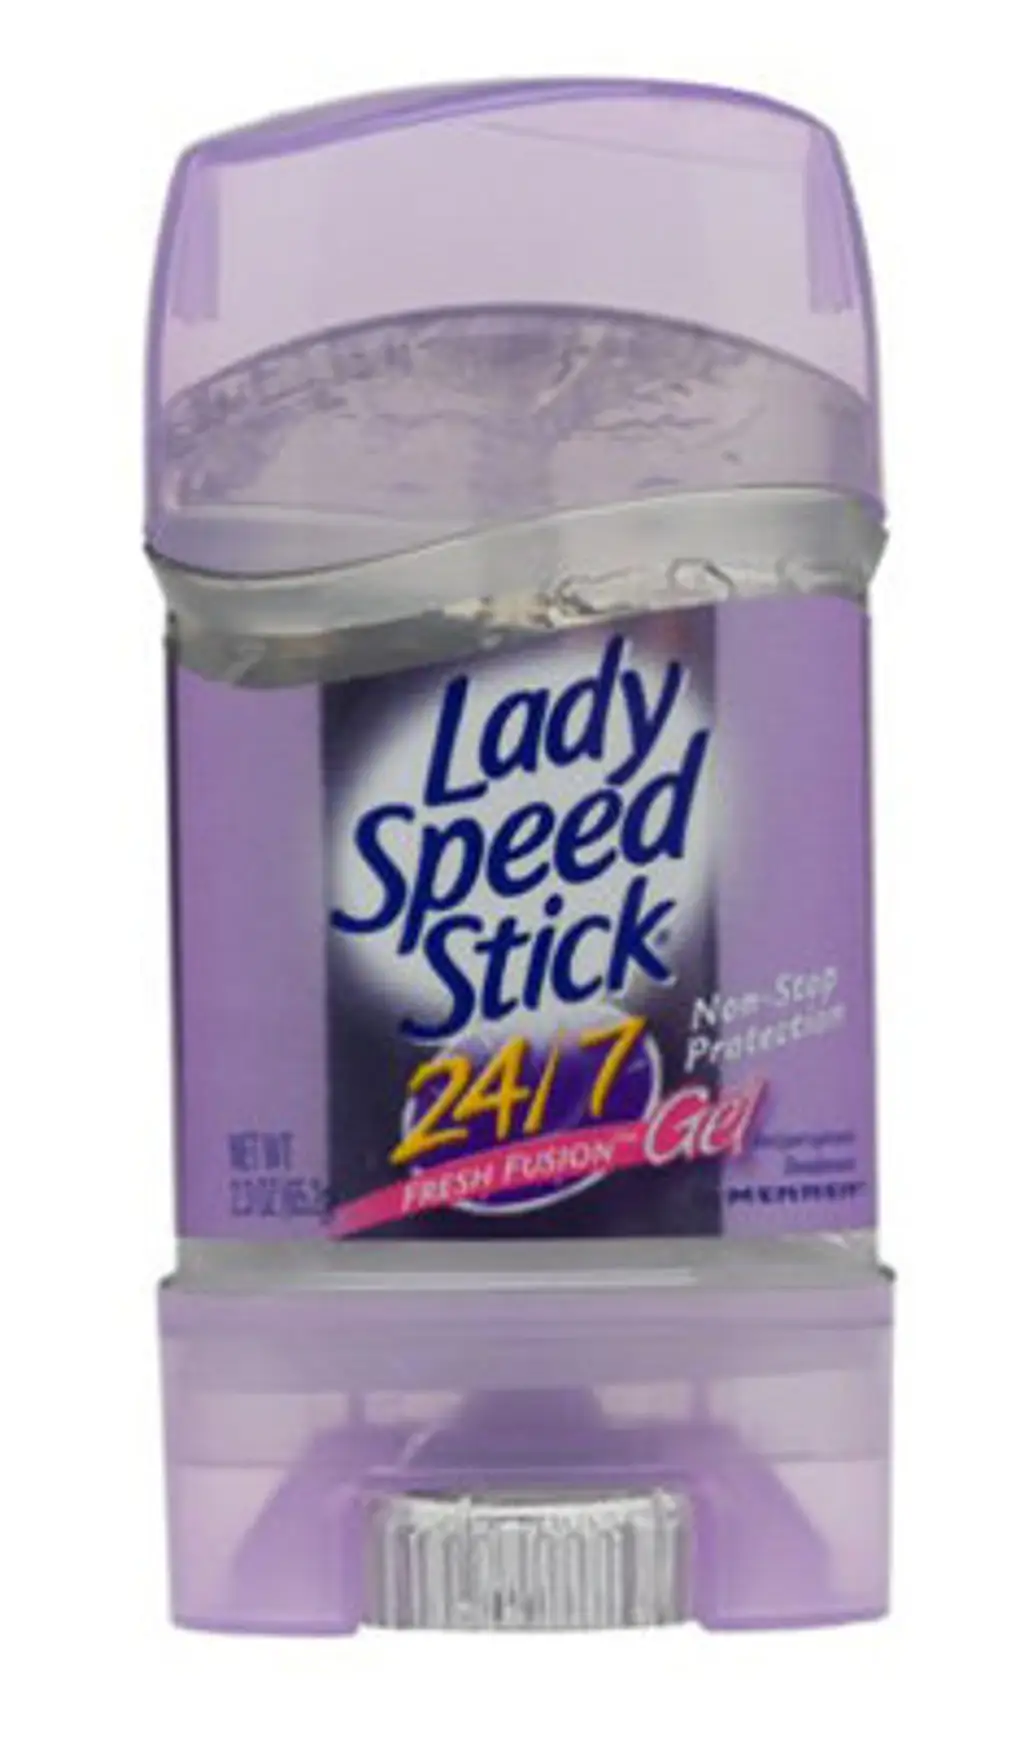 Lady Speed Stick Fresh Fusion